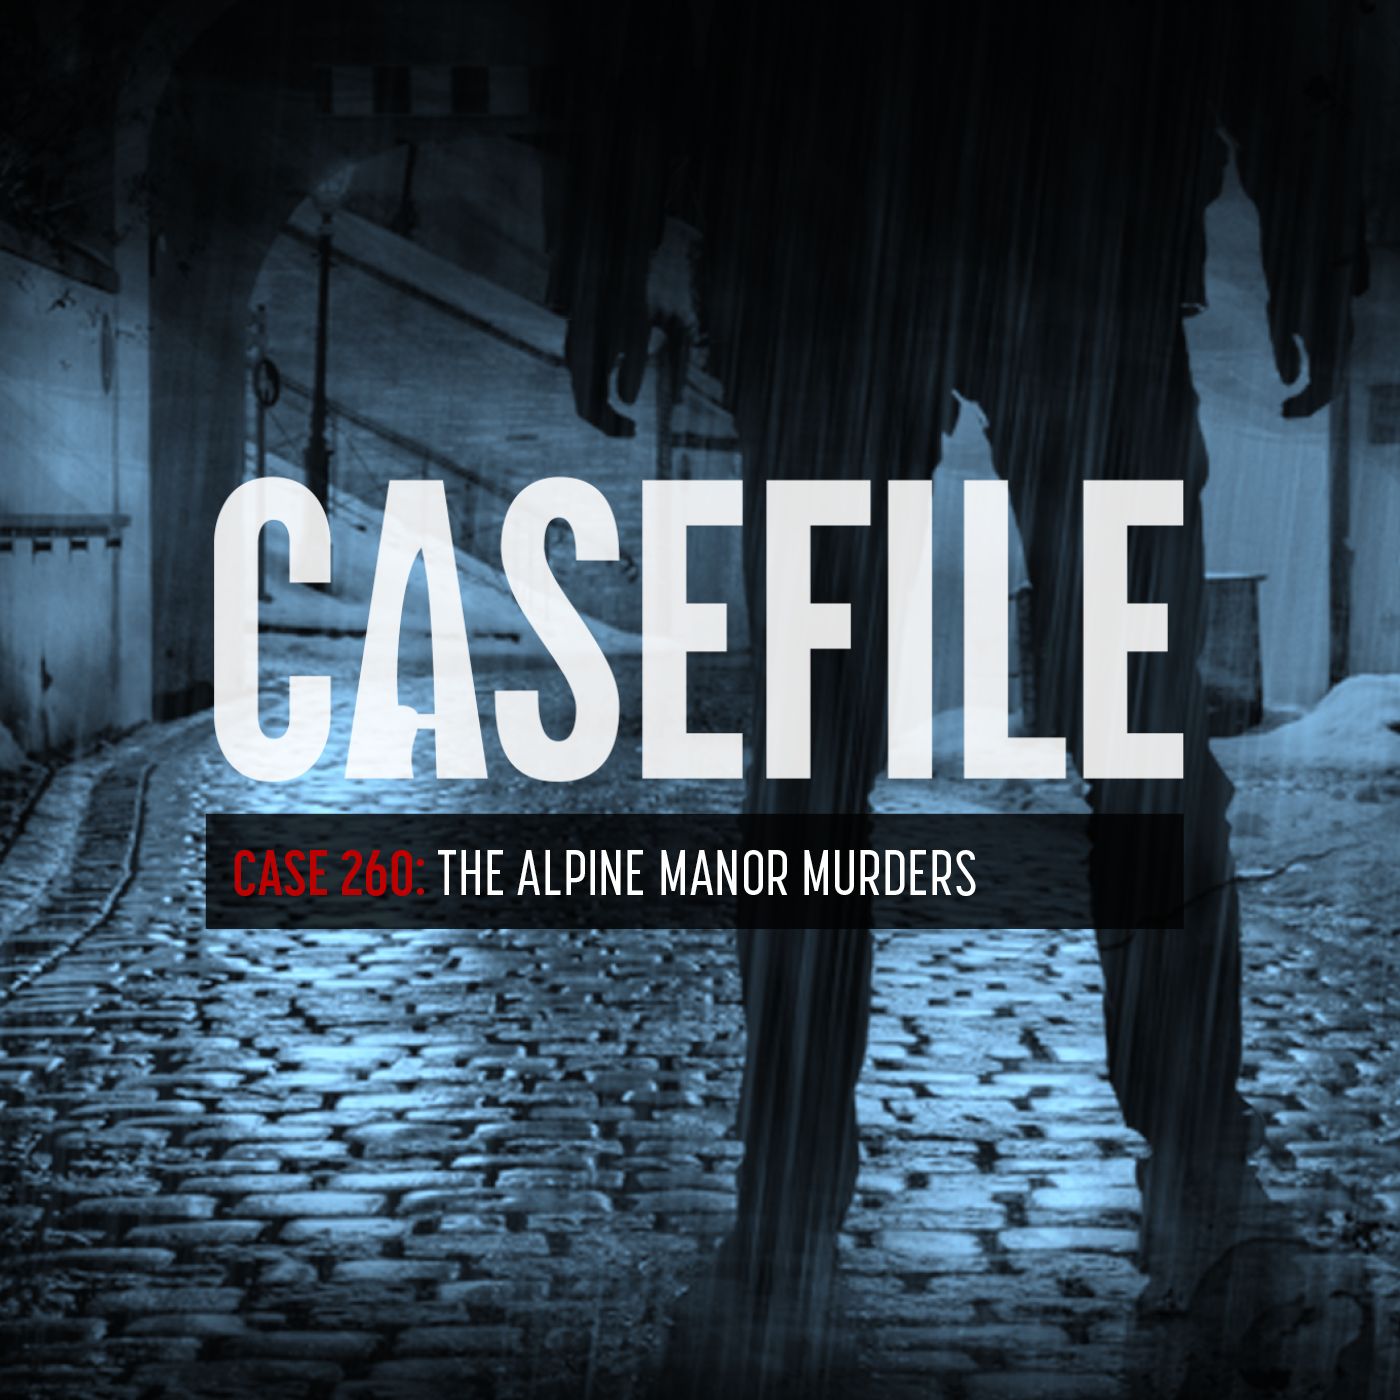 Case 260: The Alpine Manor Murders